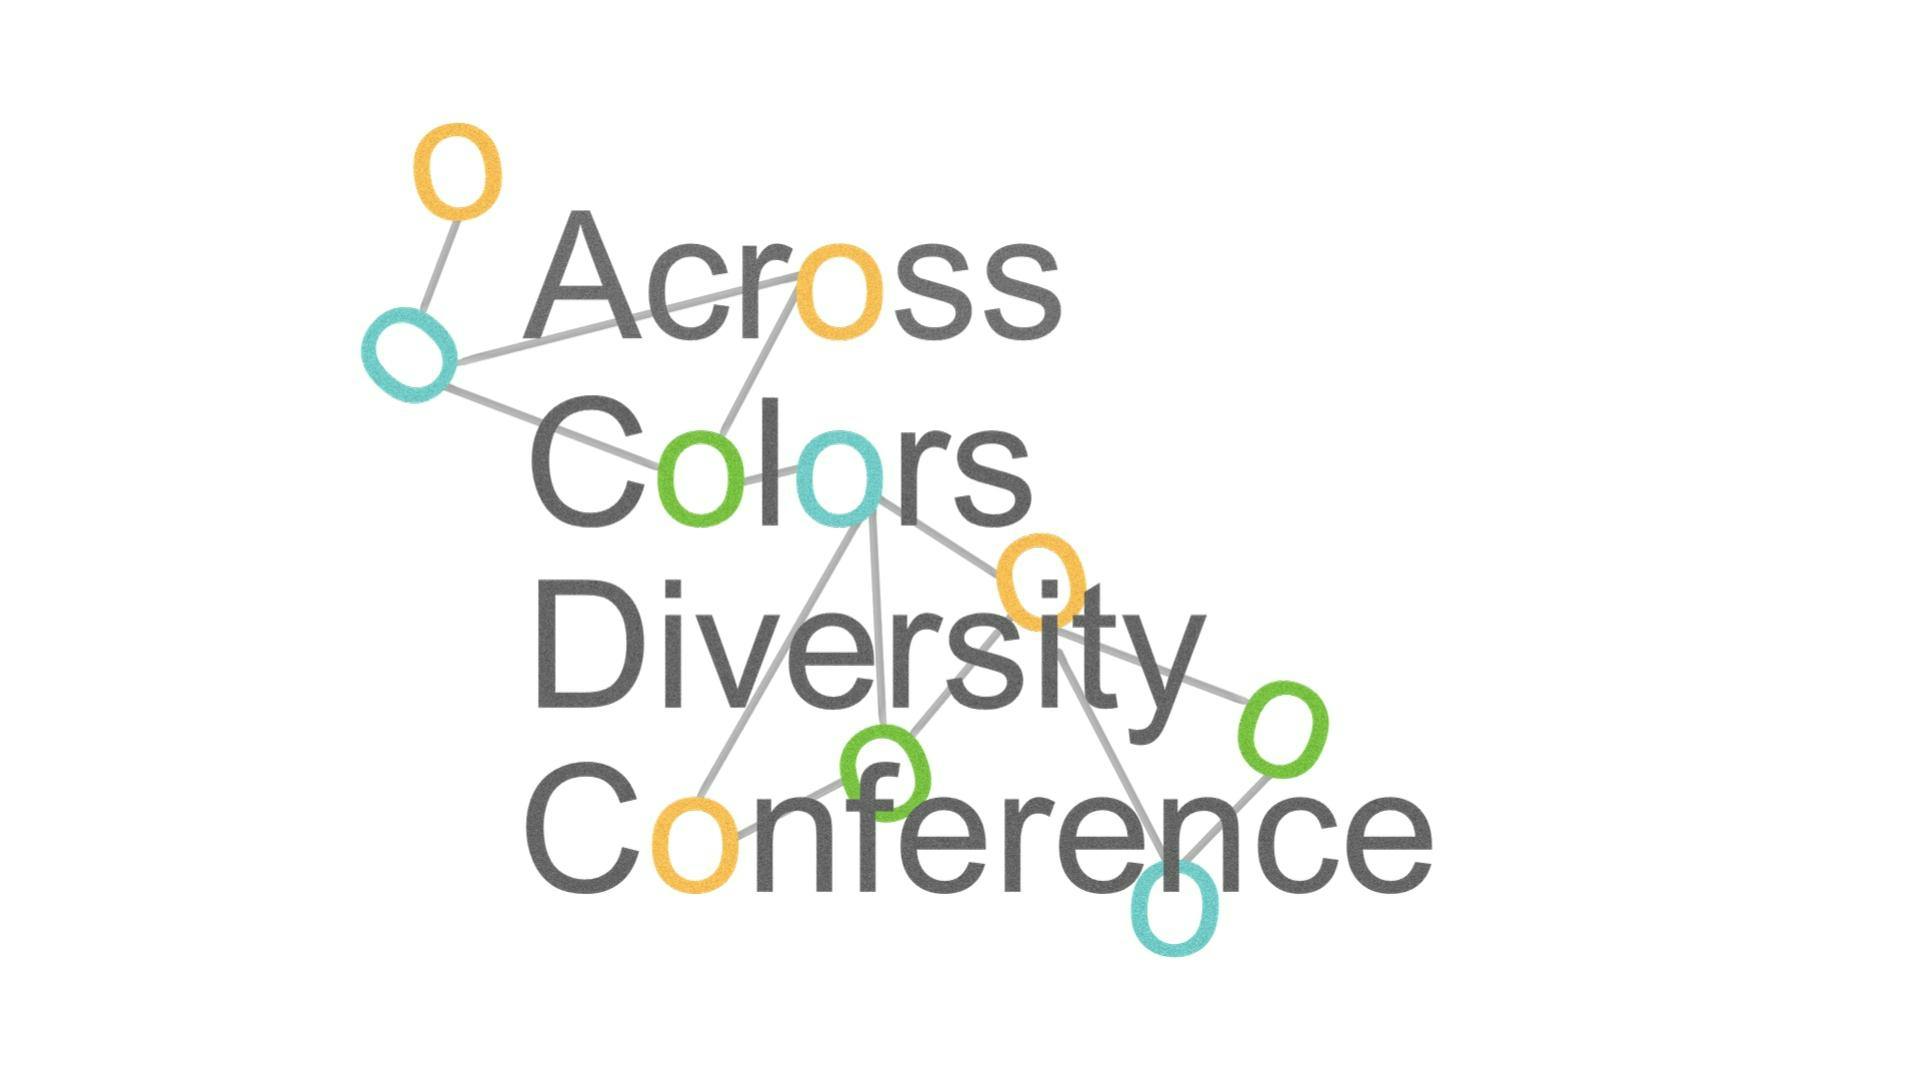 Across Colors Diversity Conference